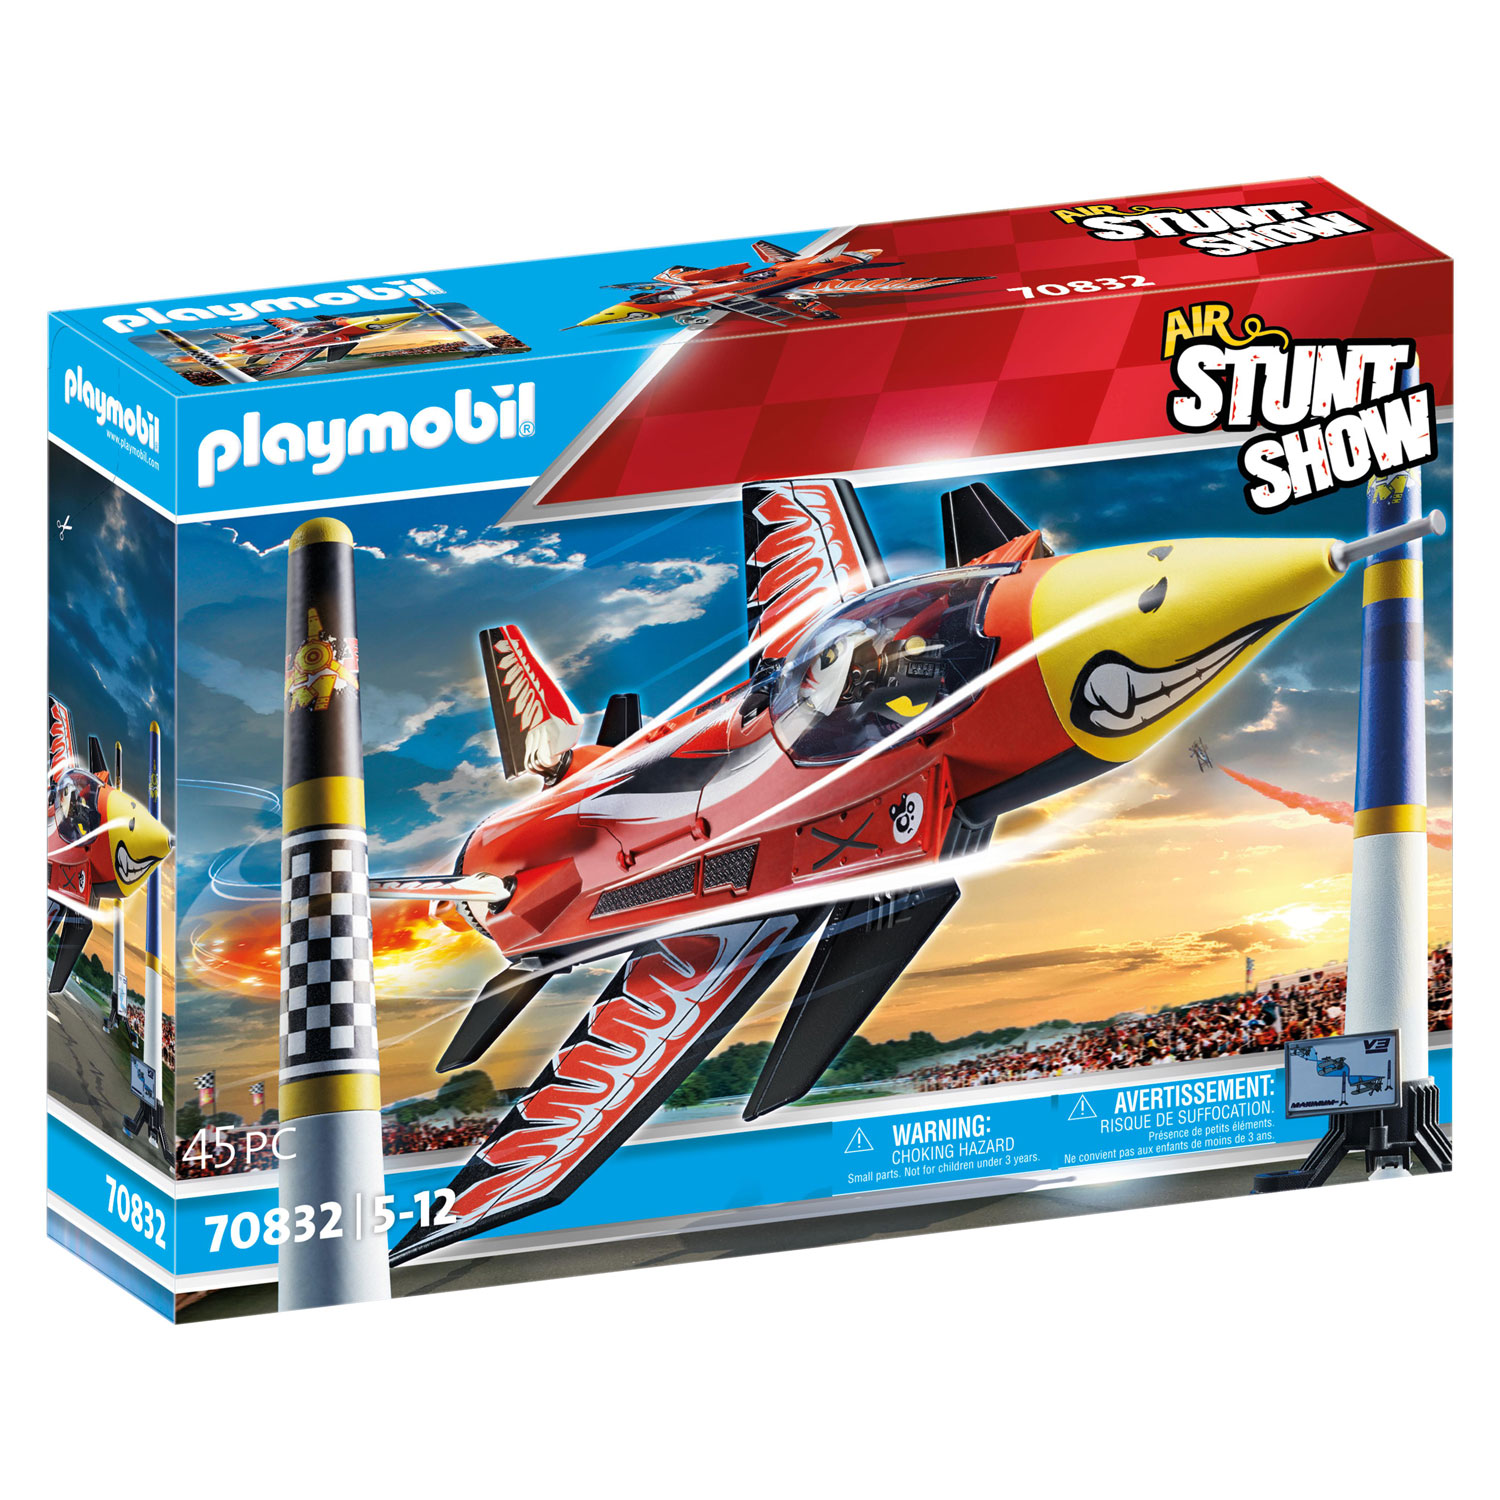 Playmobil 70832 Air Stuntshow Jet Eagle